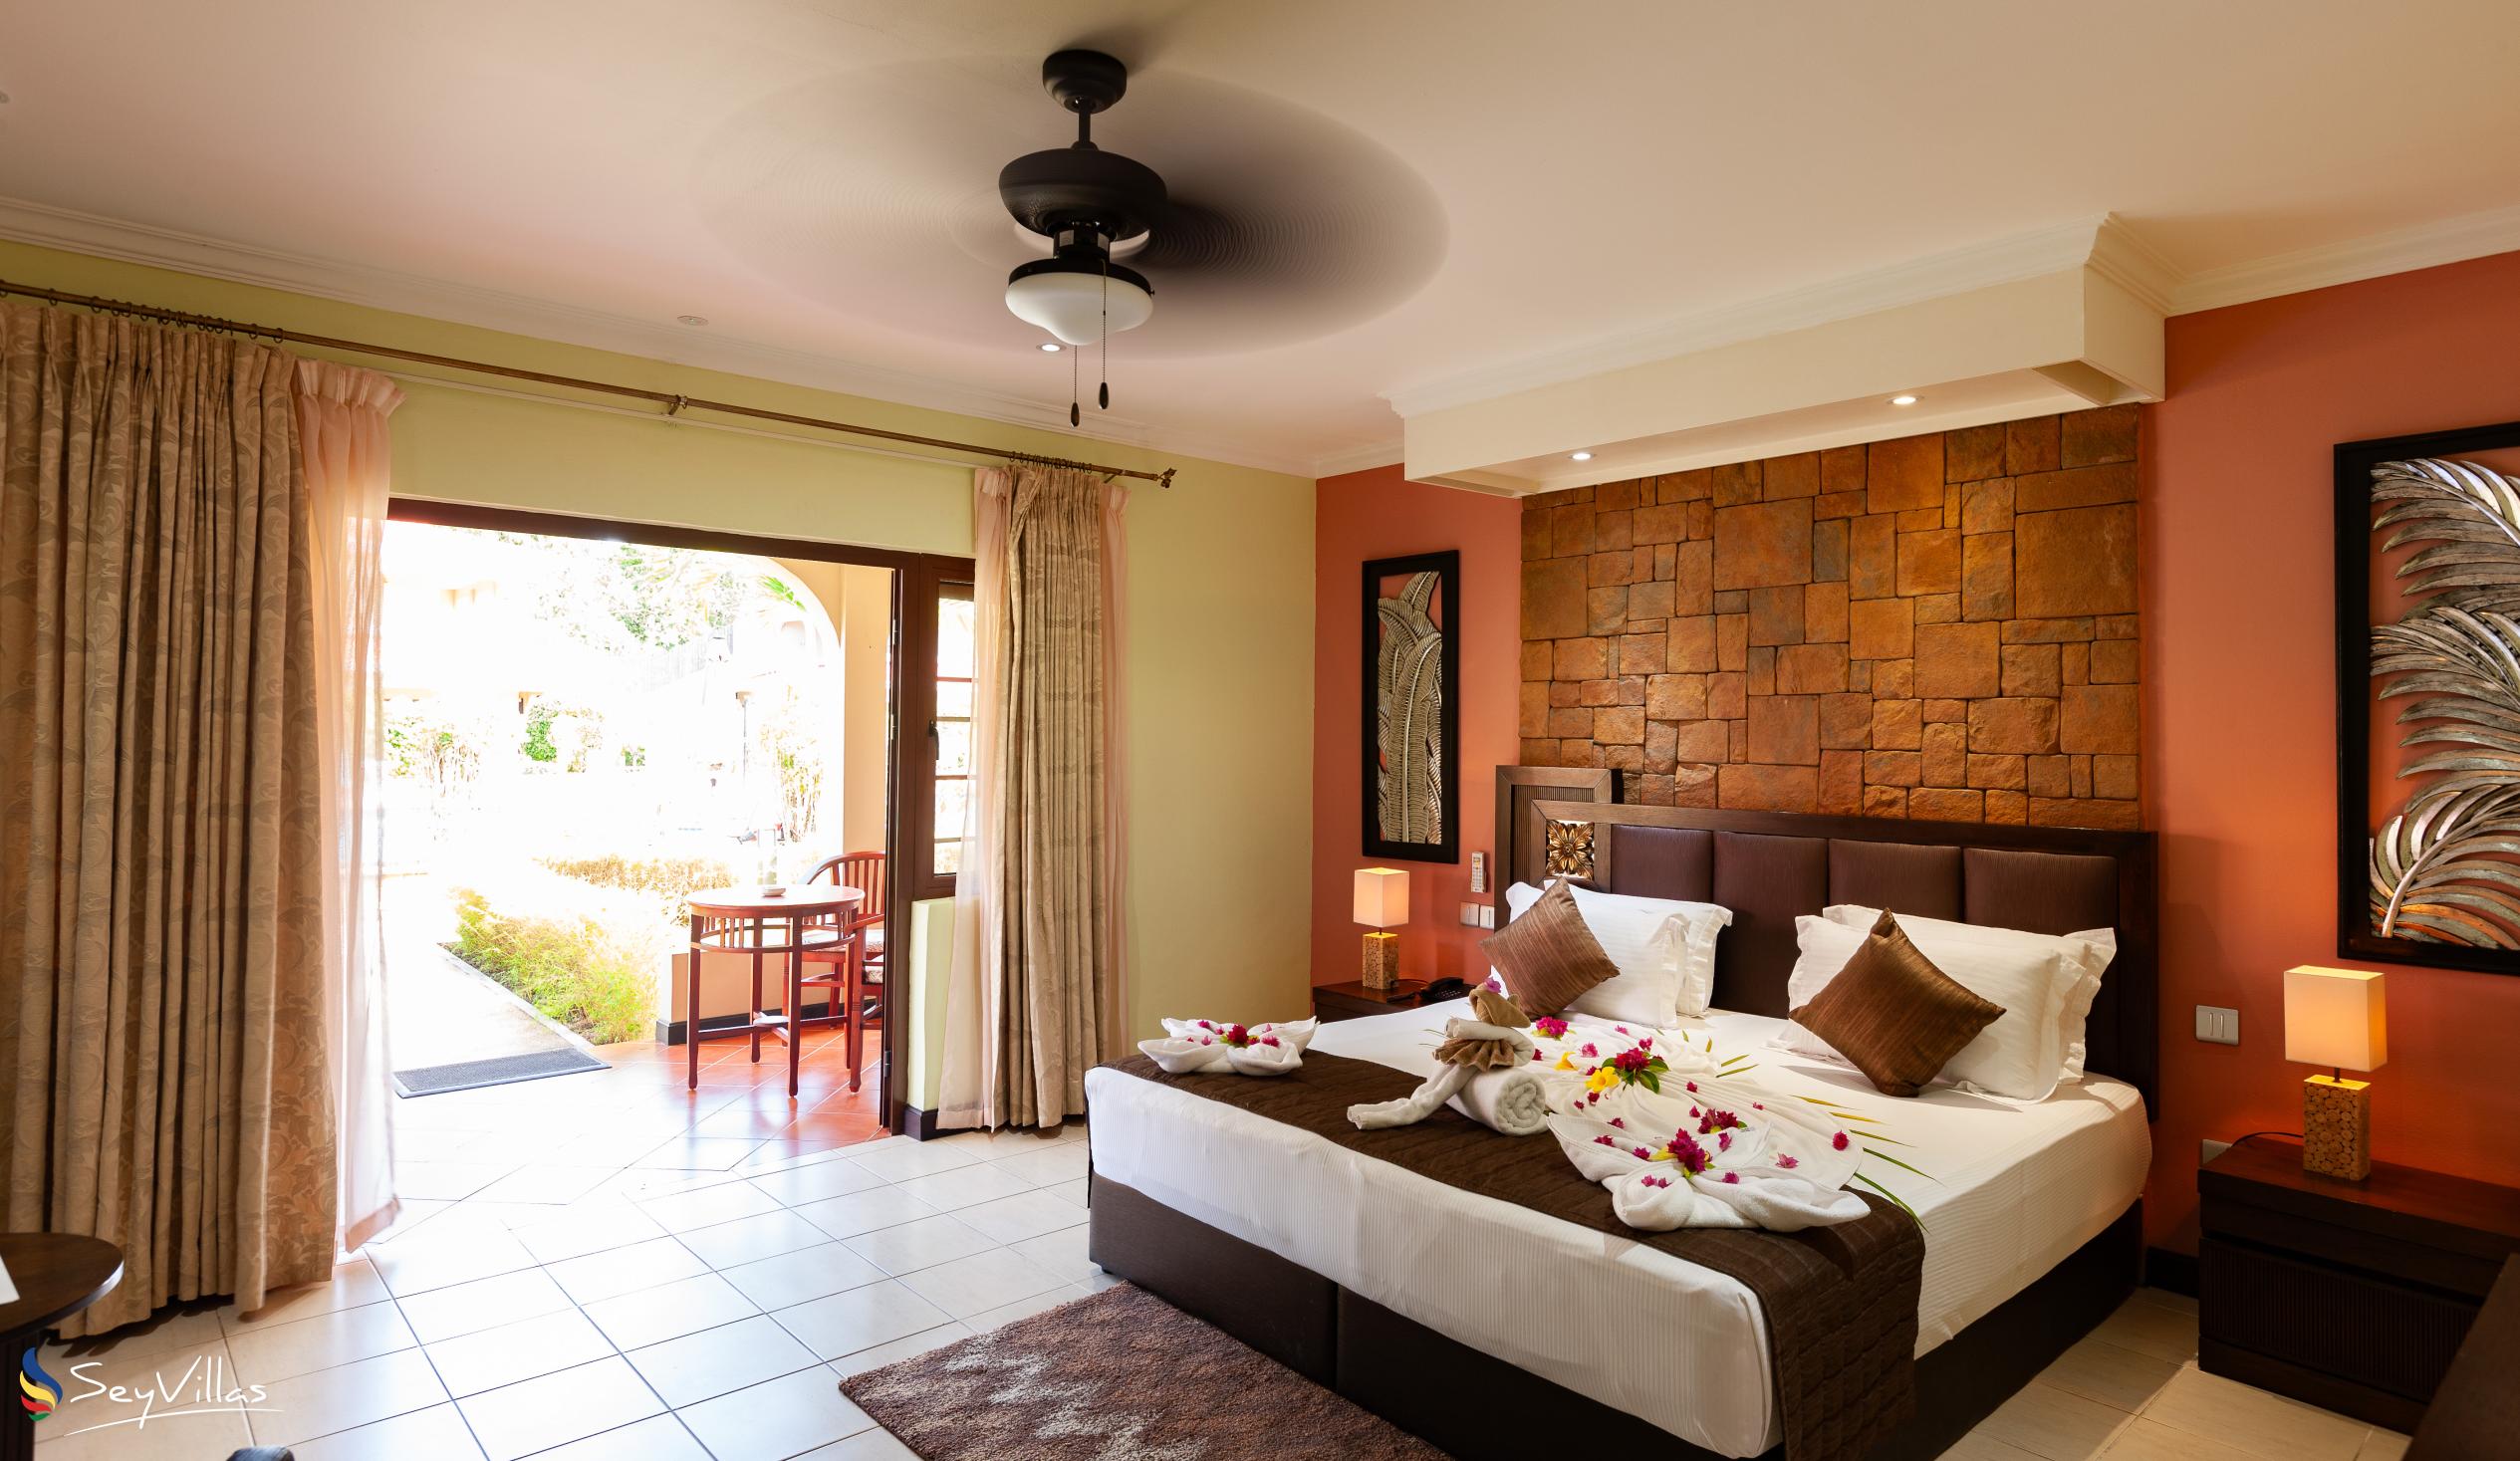 Photo 48: Oasis Hotel, Restaurant & Spa - Superior Room - Praslin (Seychelles)